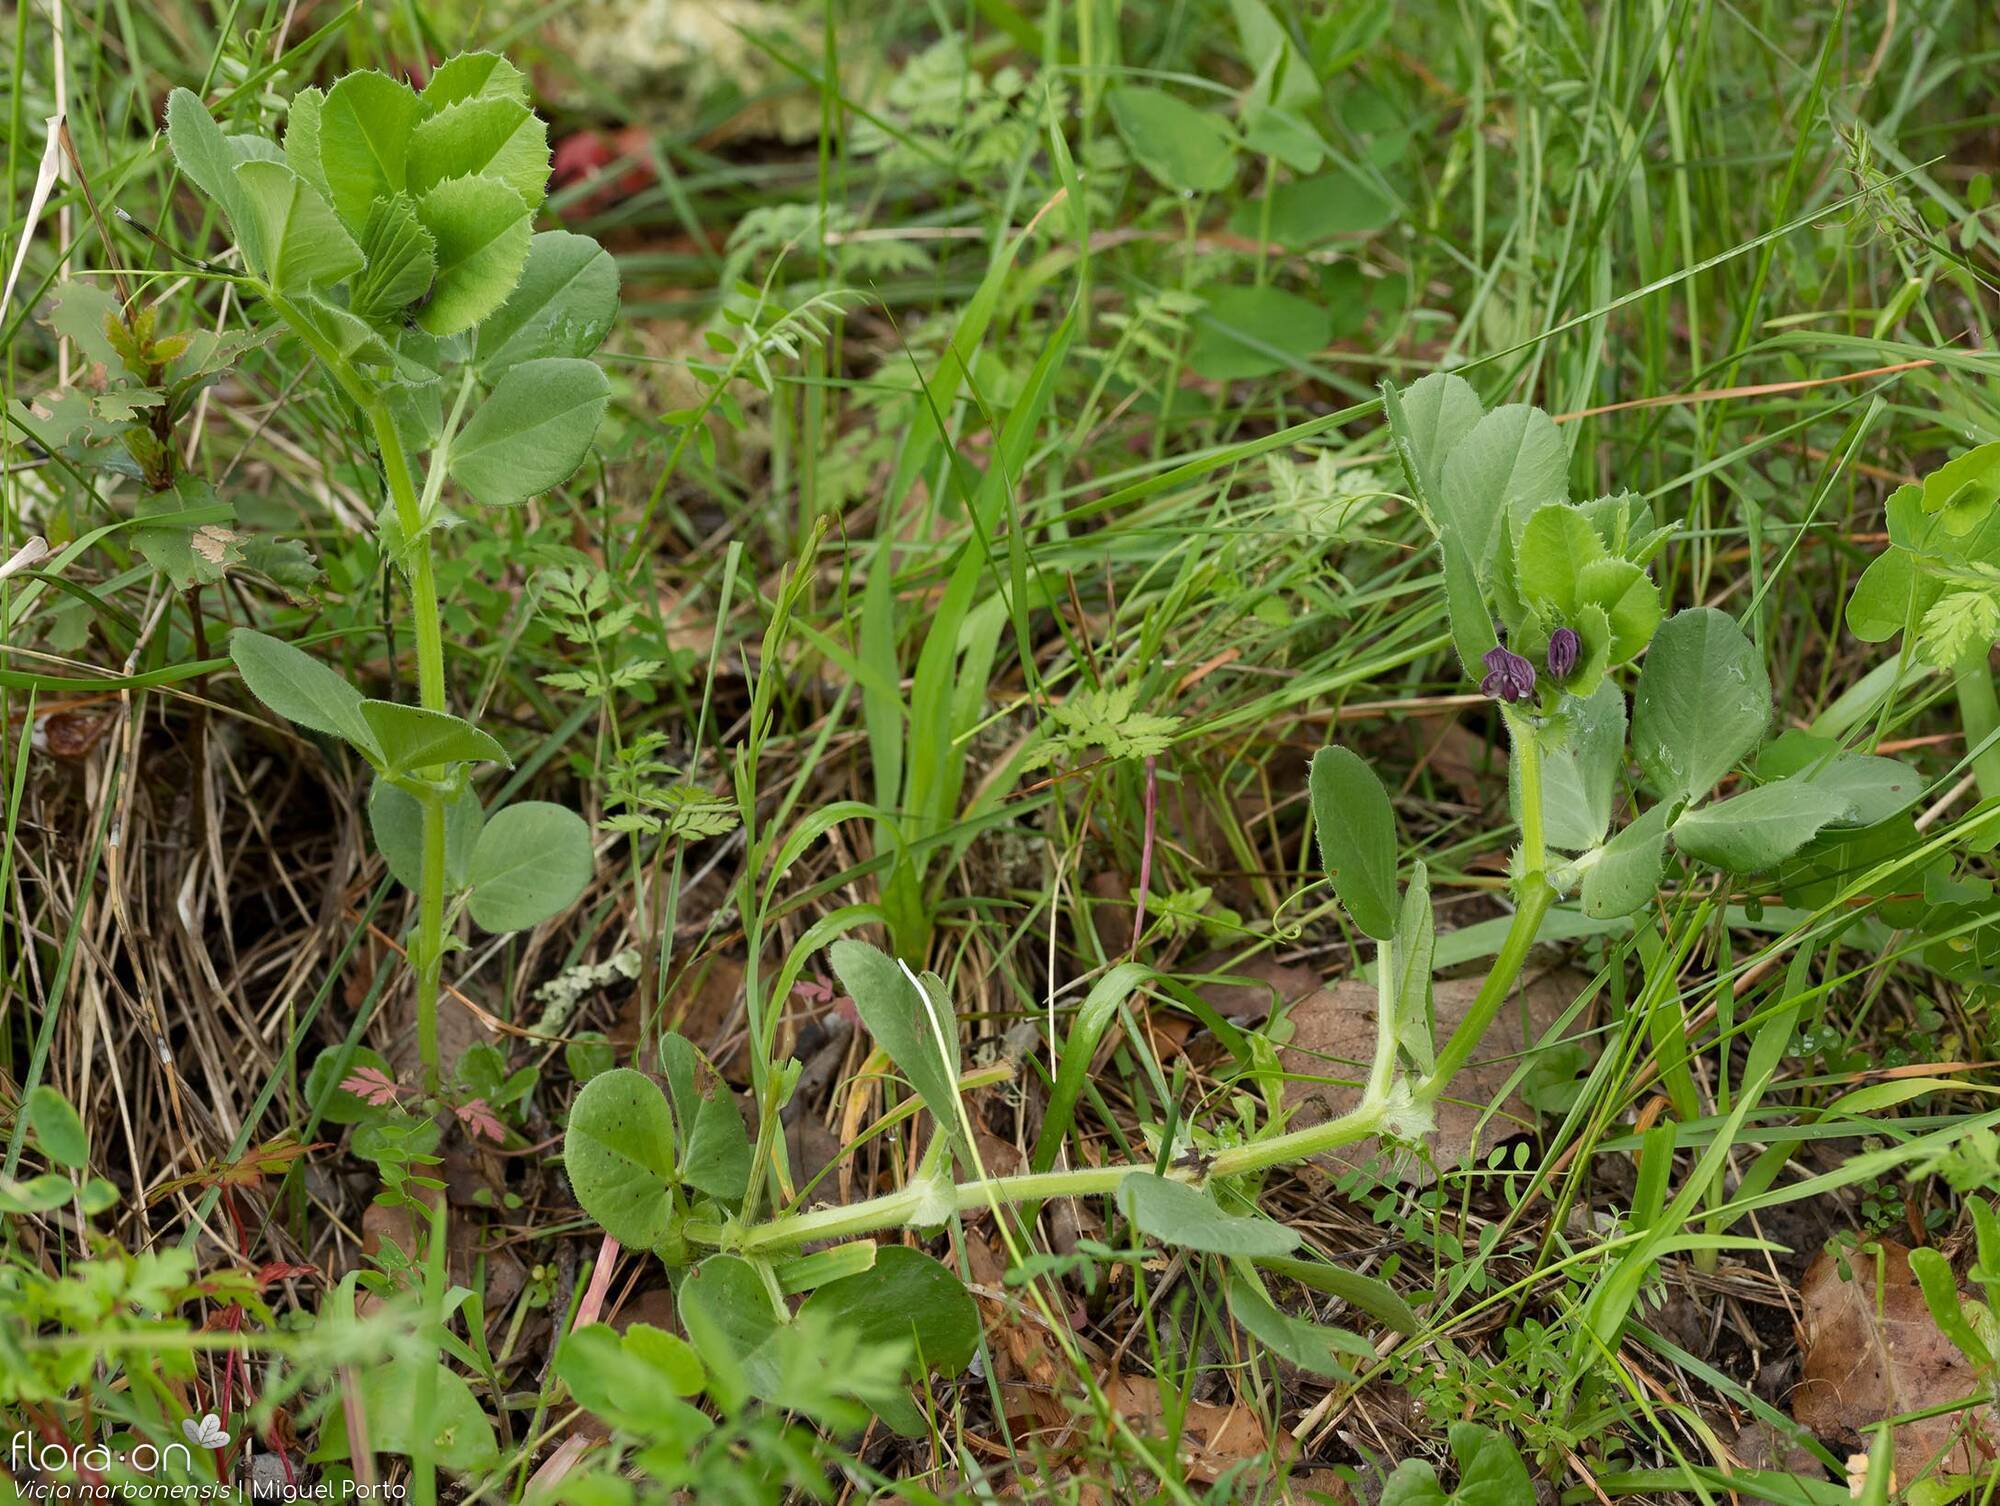 Vicia narbonensis-(1) - Hábito | Miguel Porto; CC BY-NC 4.0